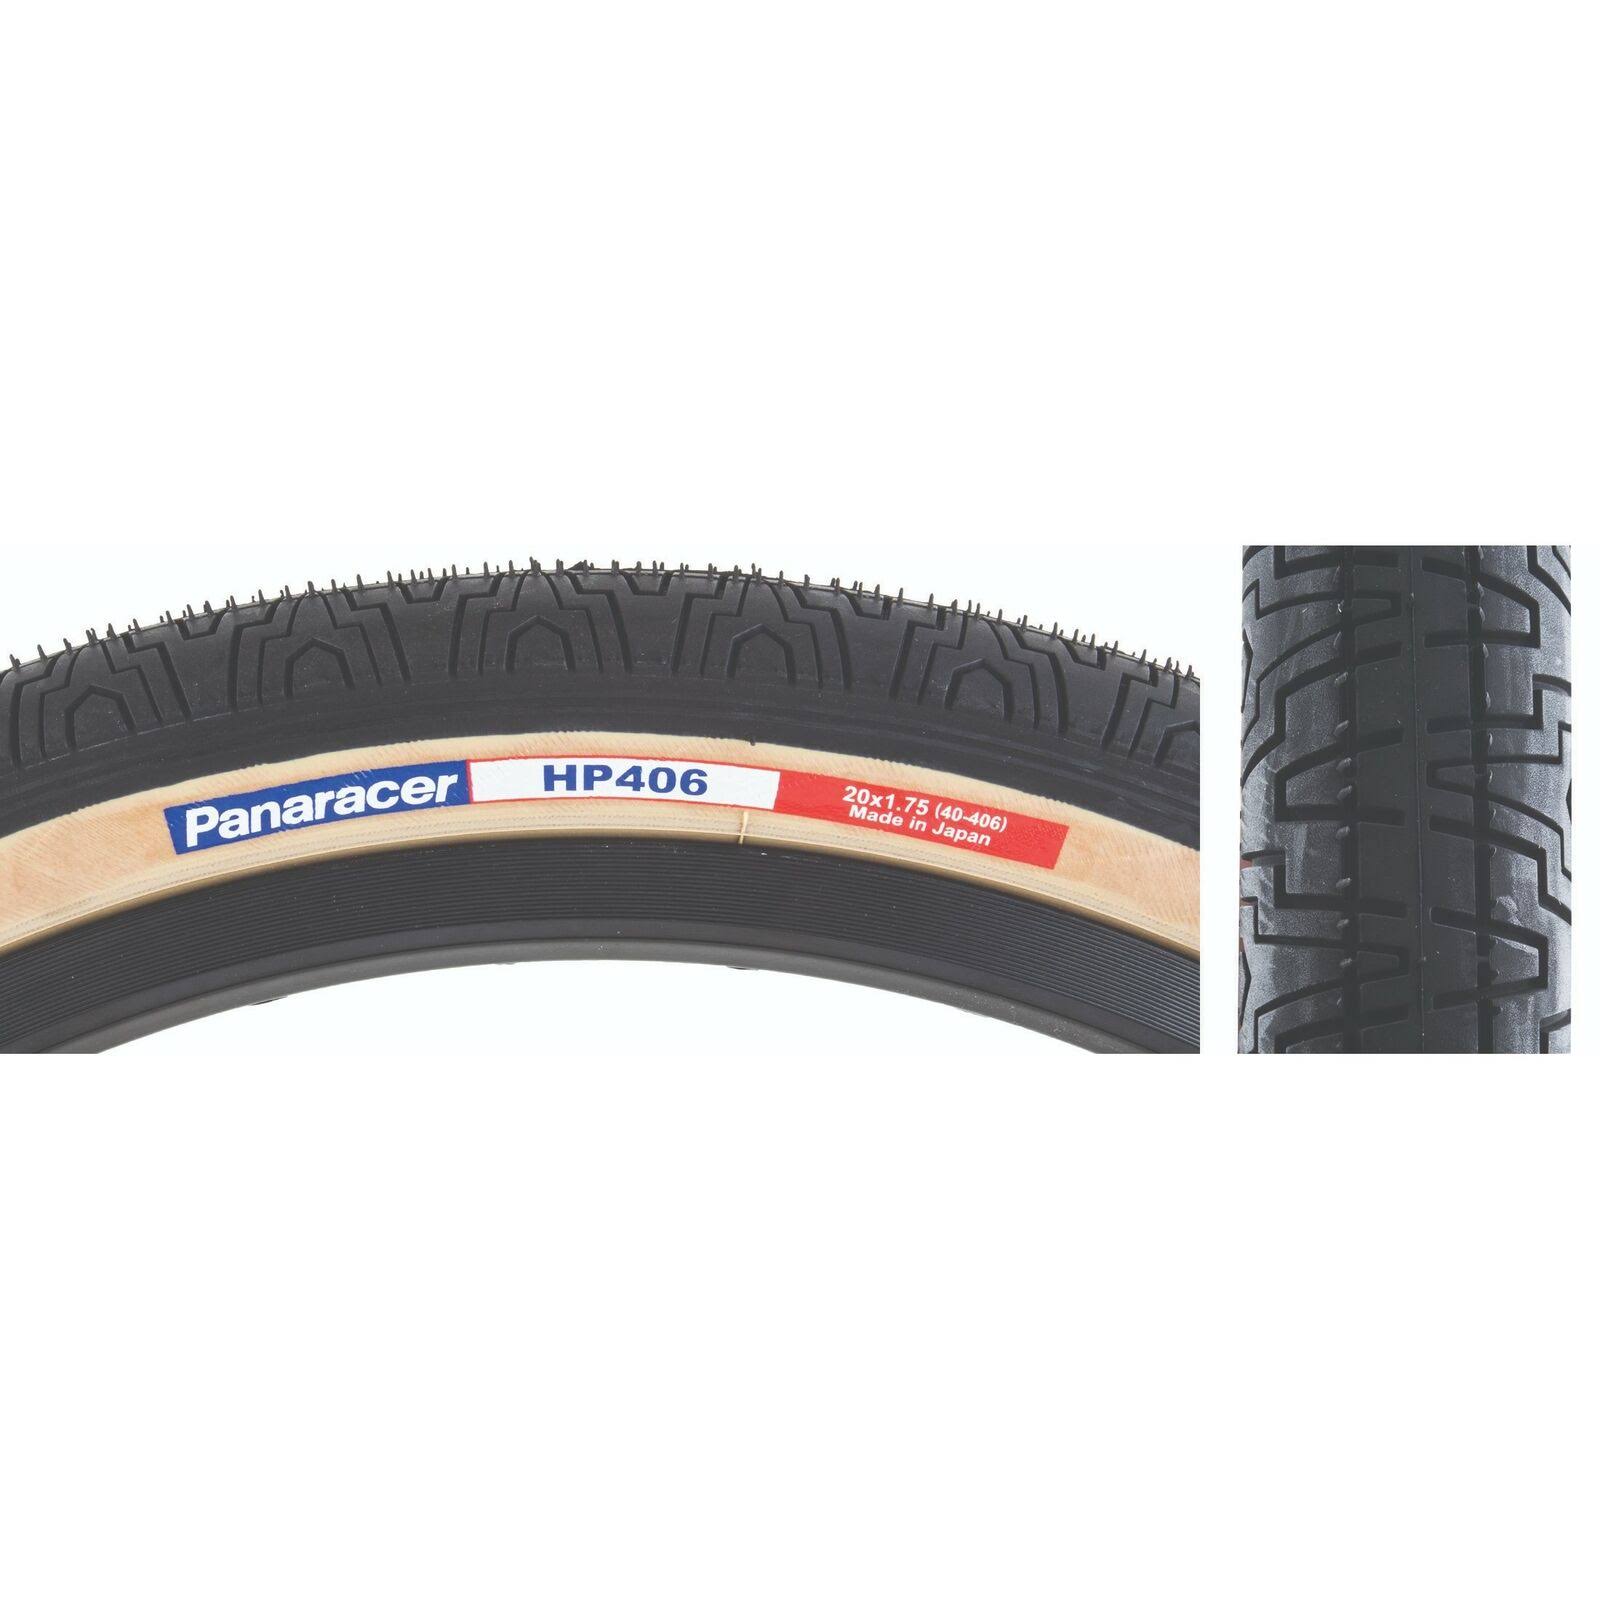 Panaracer Hp406 Wire Tire, Black/SK, 20 x 1.75